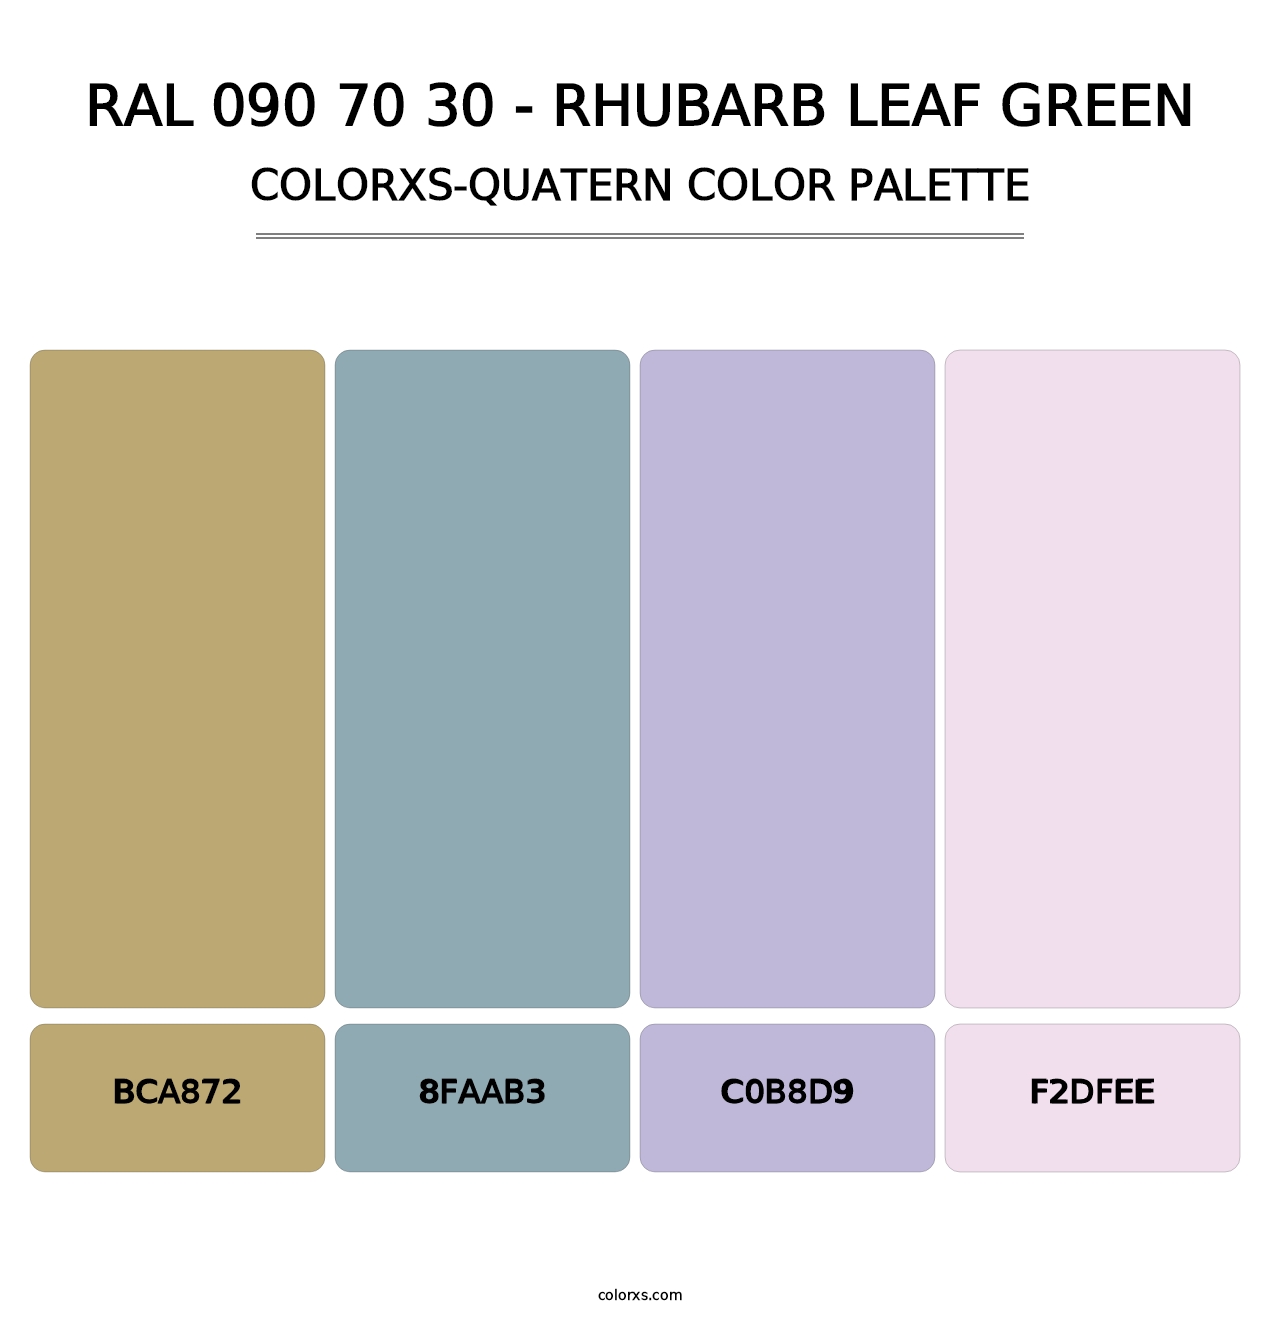 RAL 090 70 30 - Rhubarb Leaf Green - Colorxs Quatern Palette